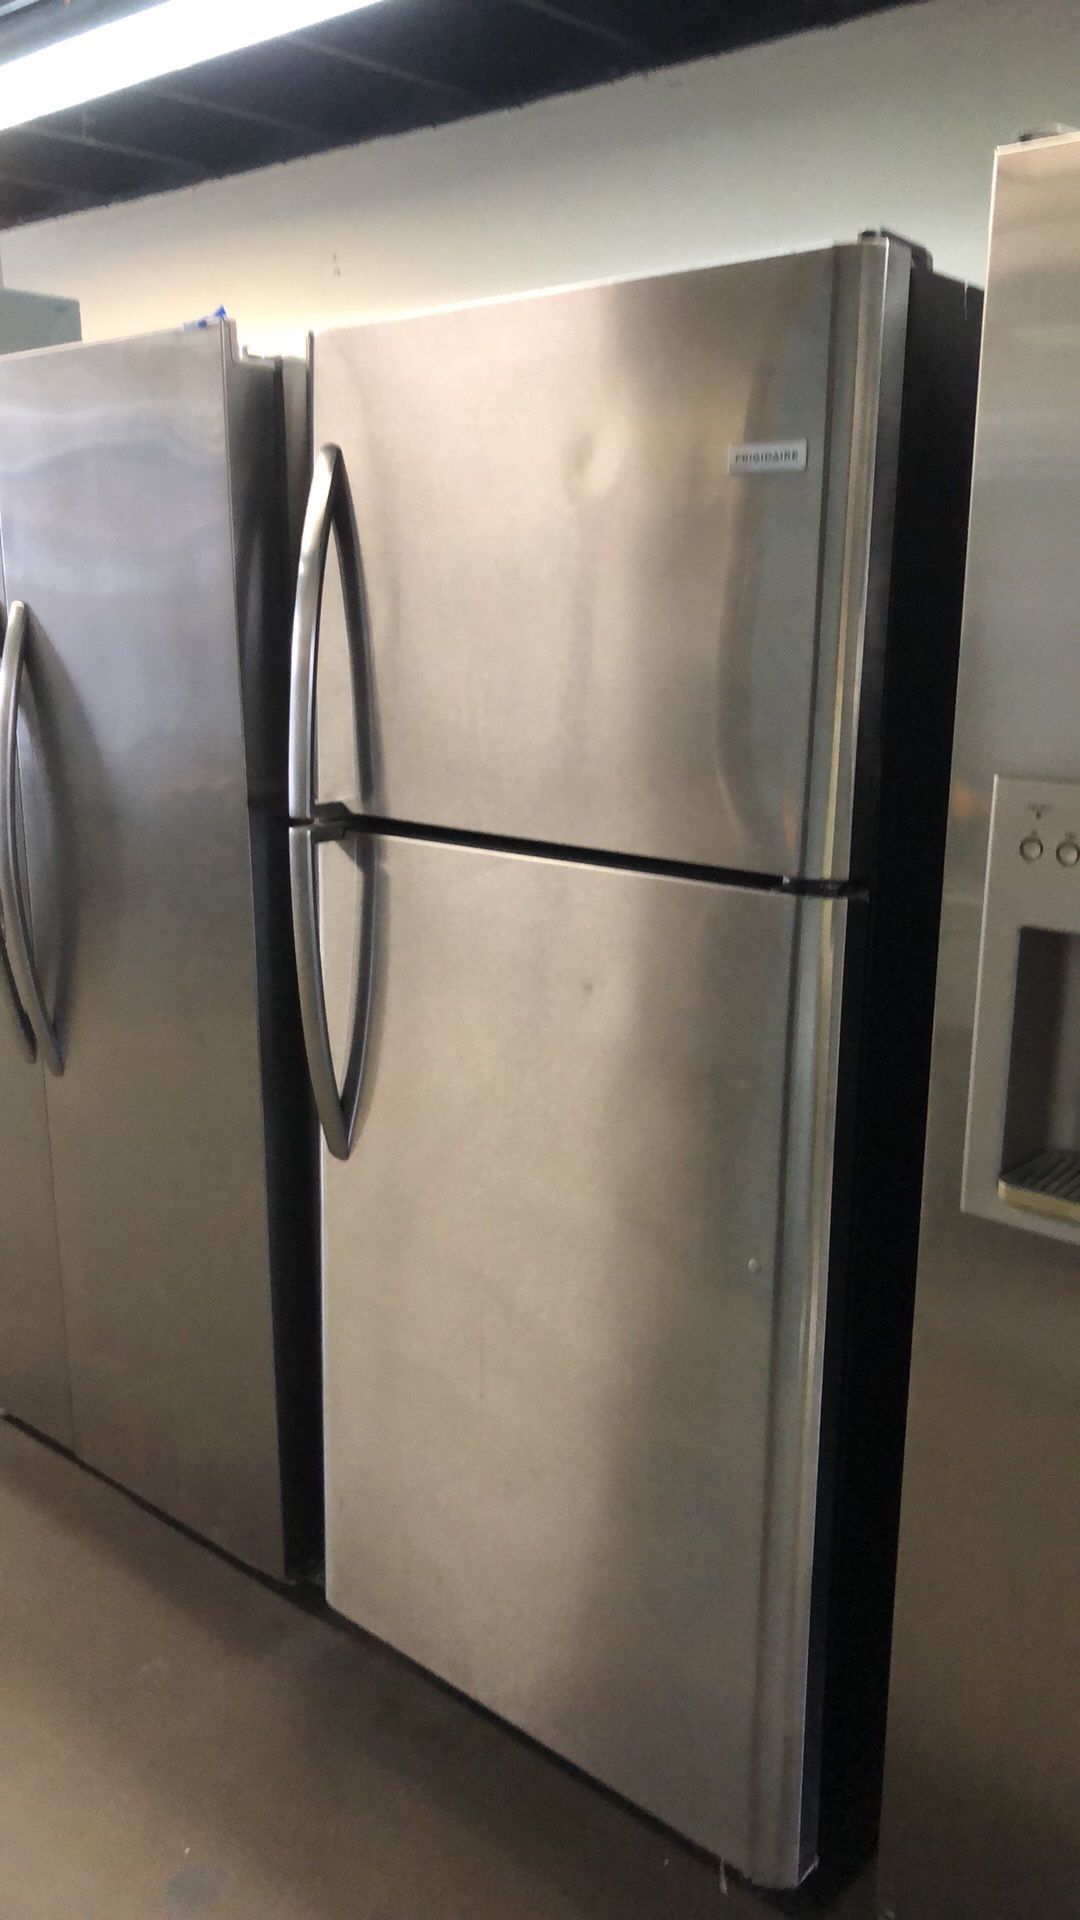 Frigidaire Stainless Steel Apartment Size Top Freezer Refrigerator 